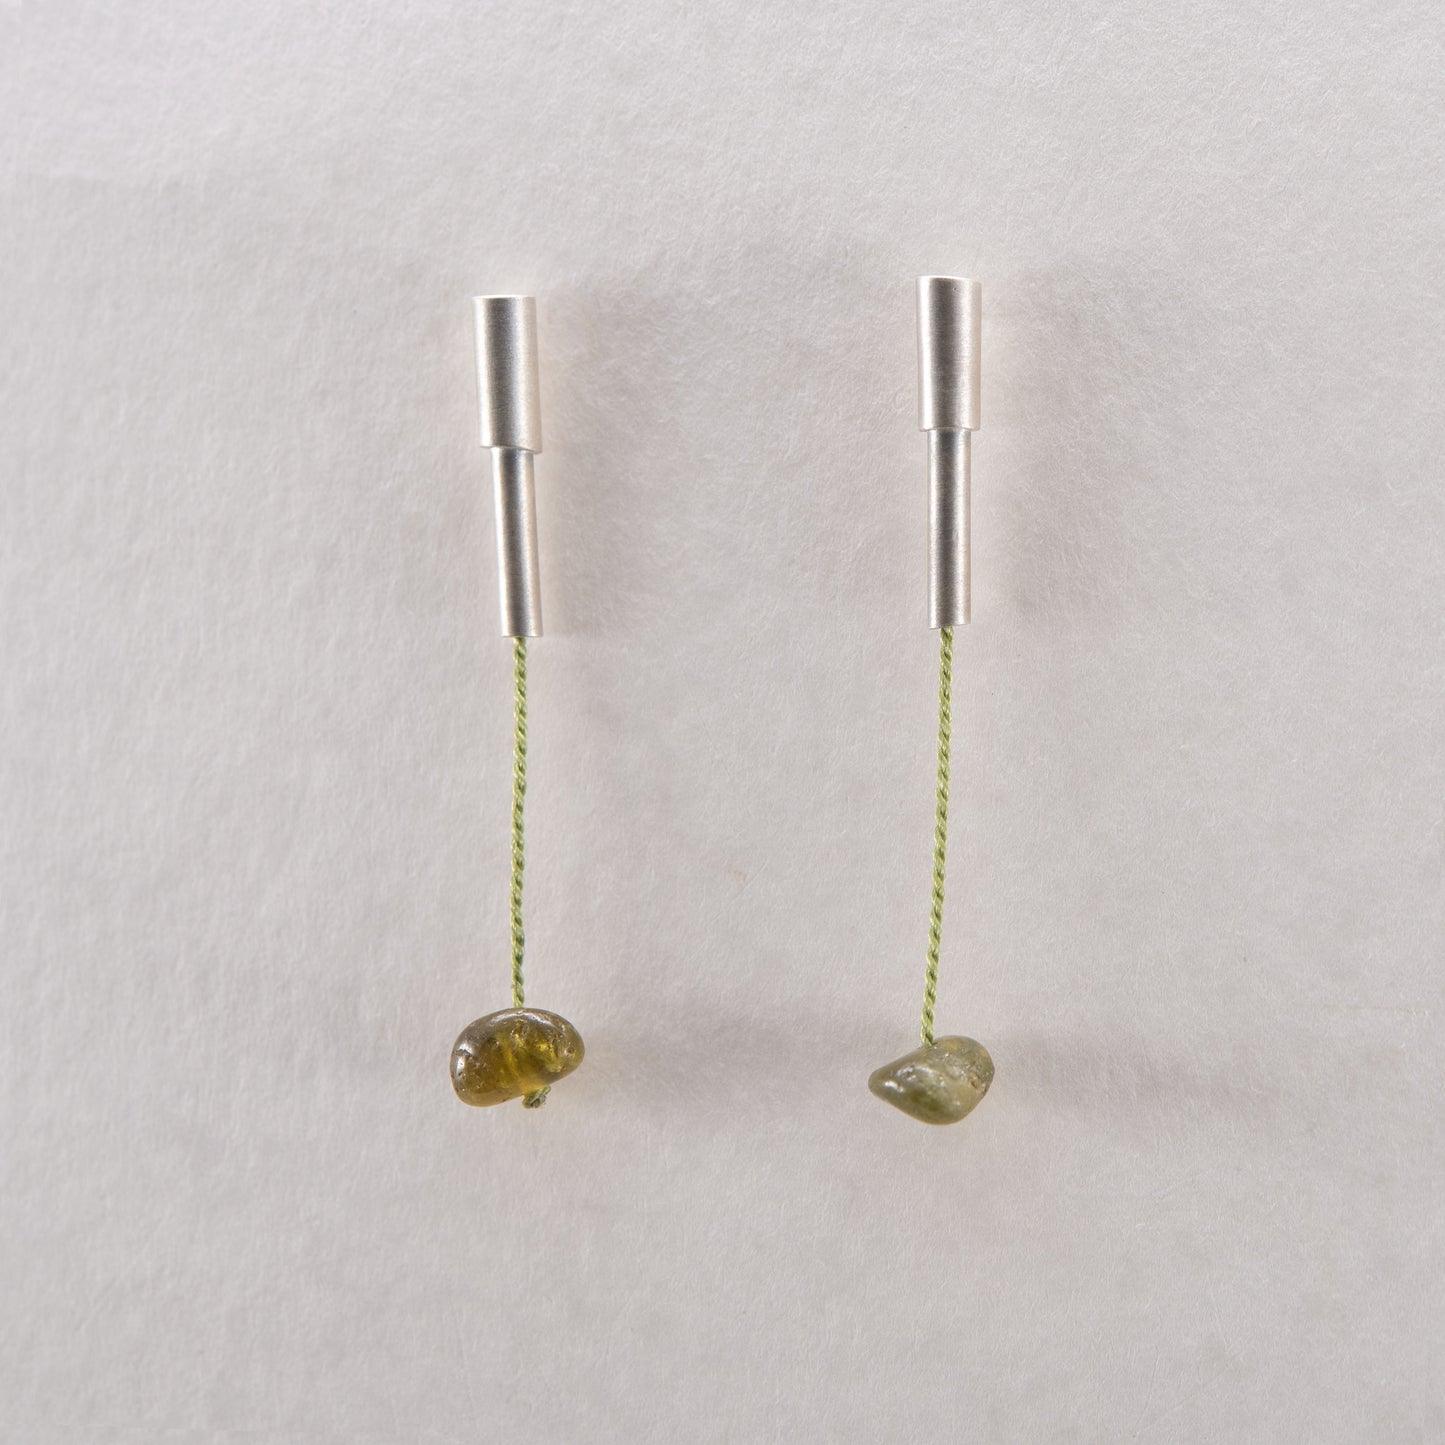 Green grenat and silver tube pendant earrings